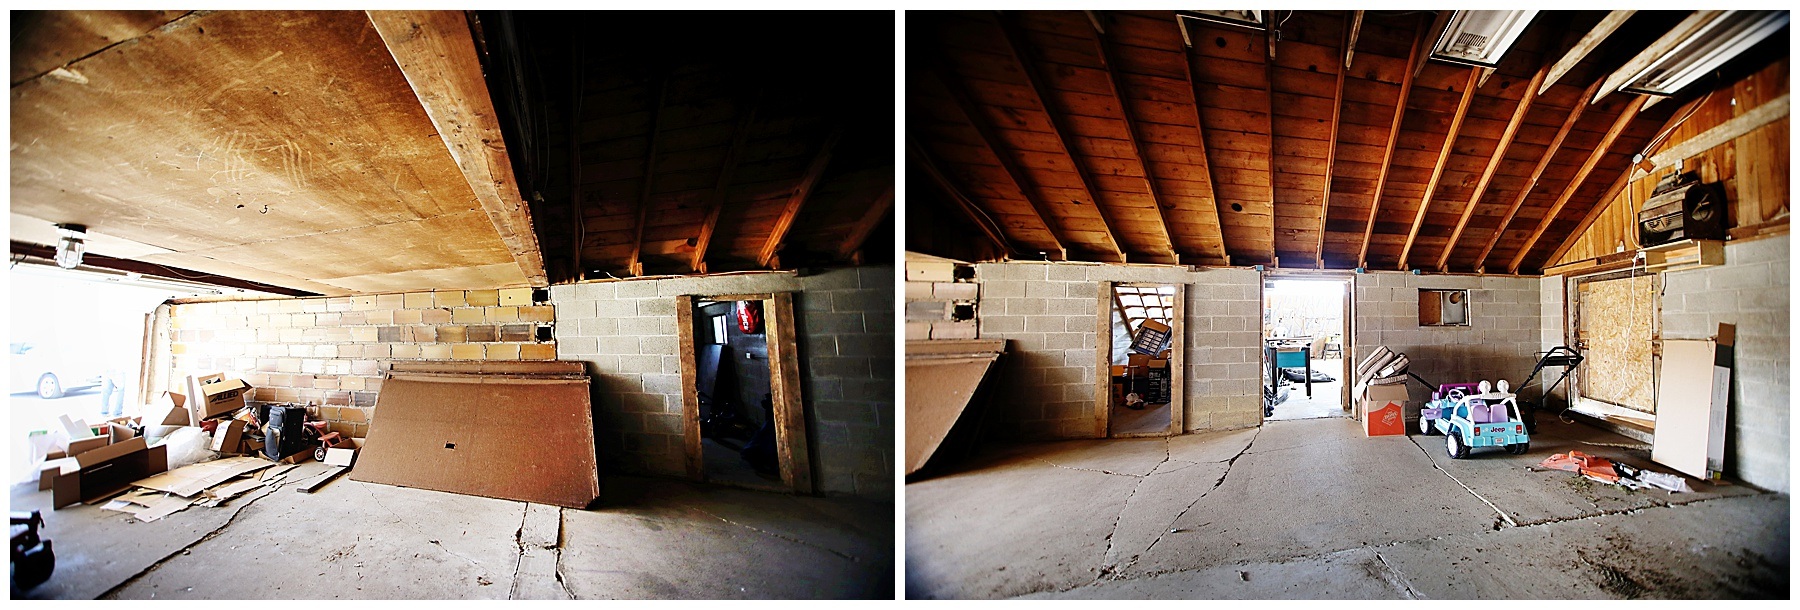 Our Barndominium Barn Renovation - Sugar Maple Farmhouse